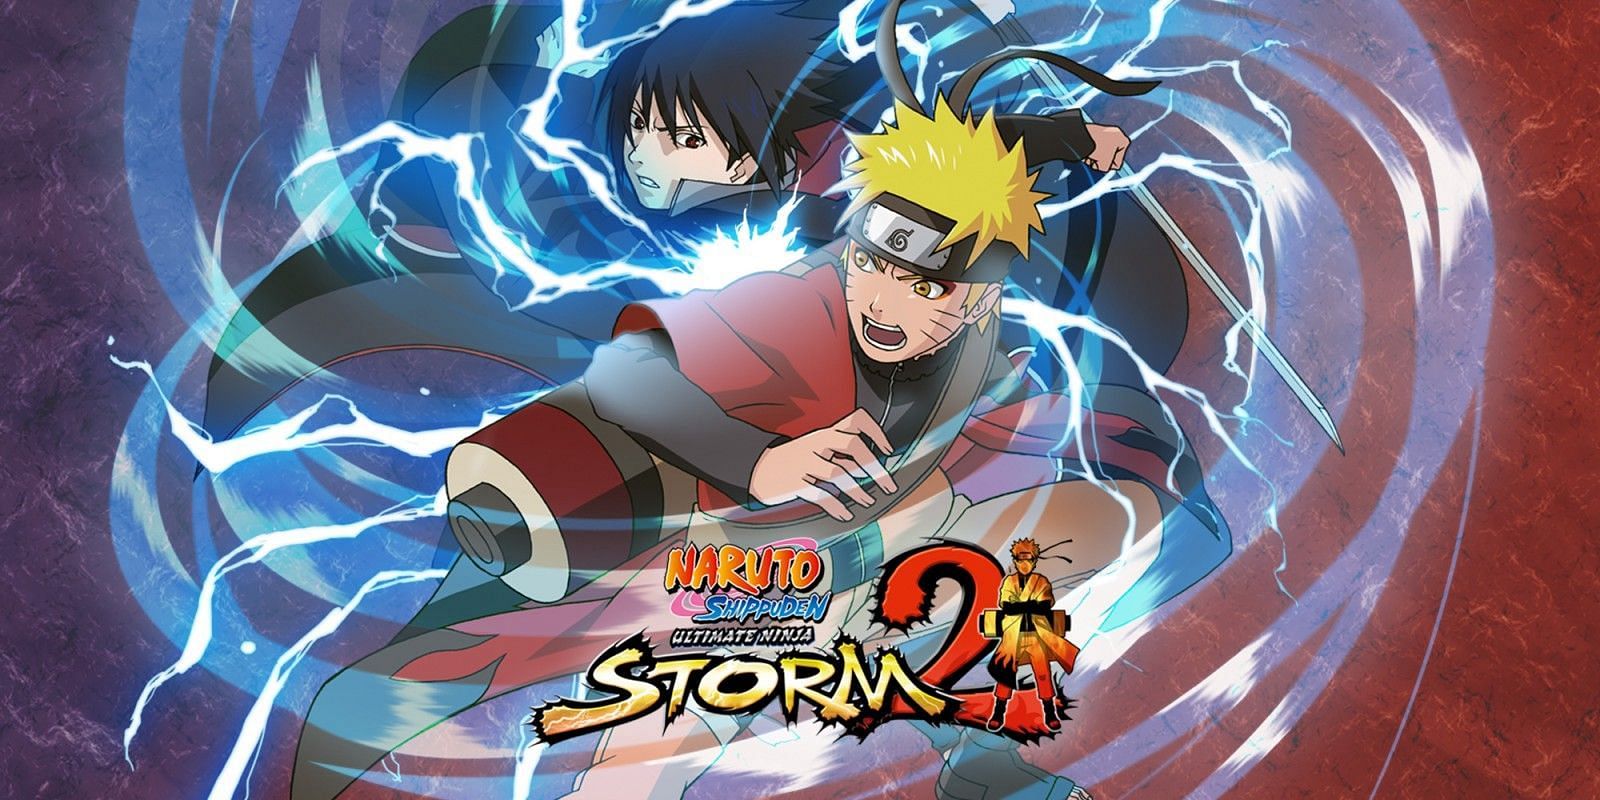 Naruto Shippuden: Ultimate Ninja Storm 2 (image via Nintendo)